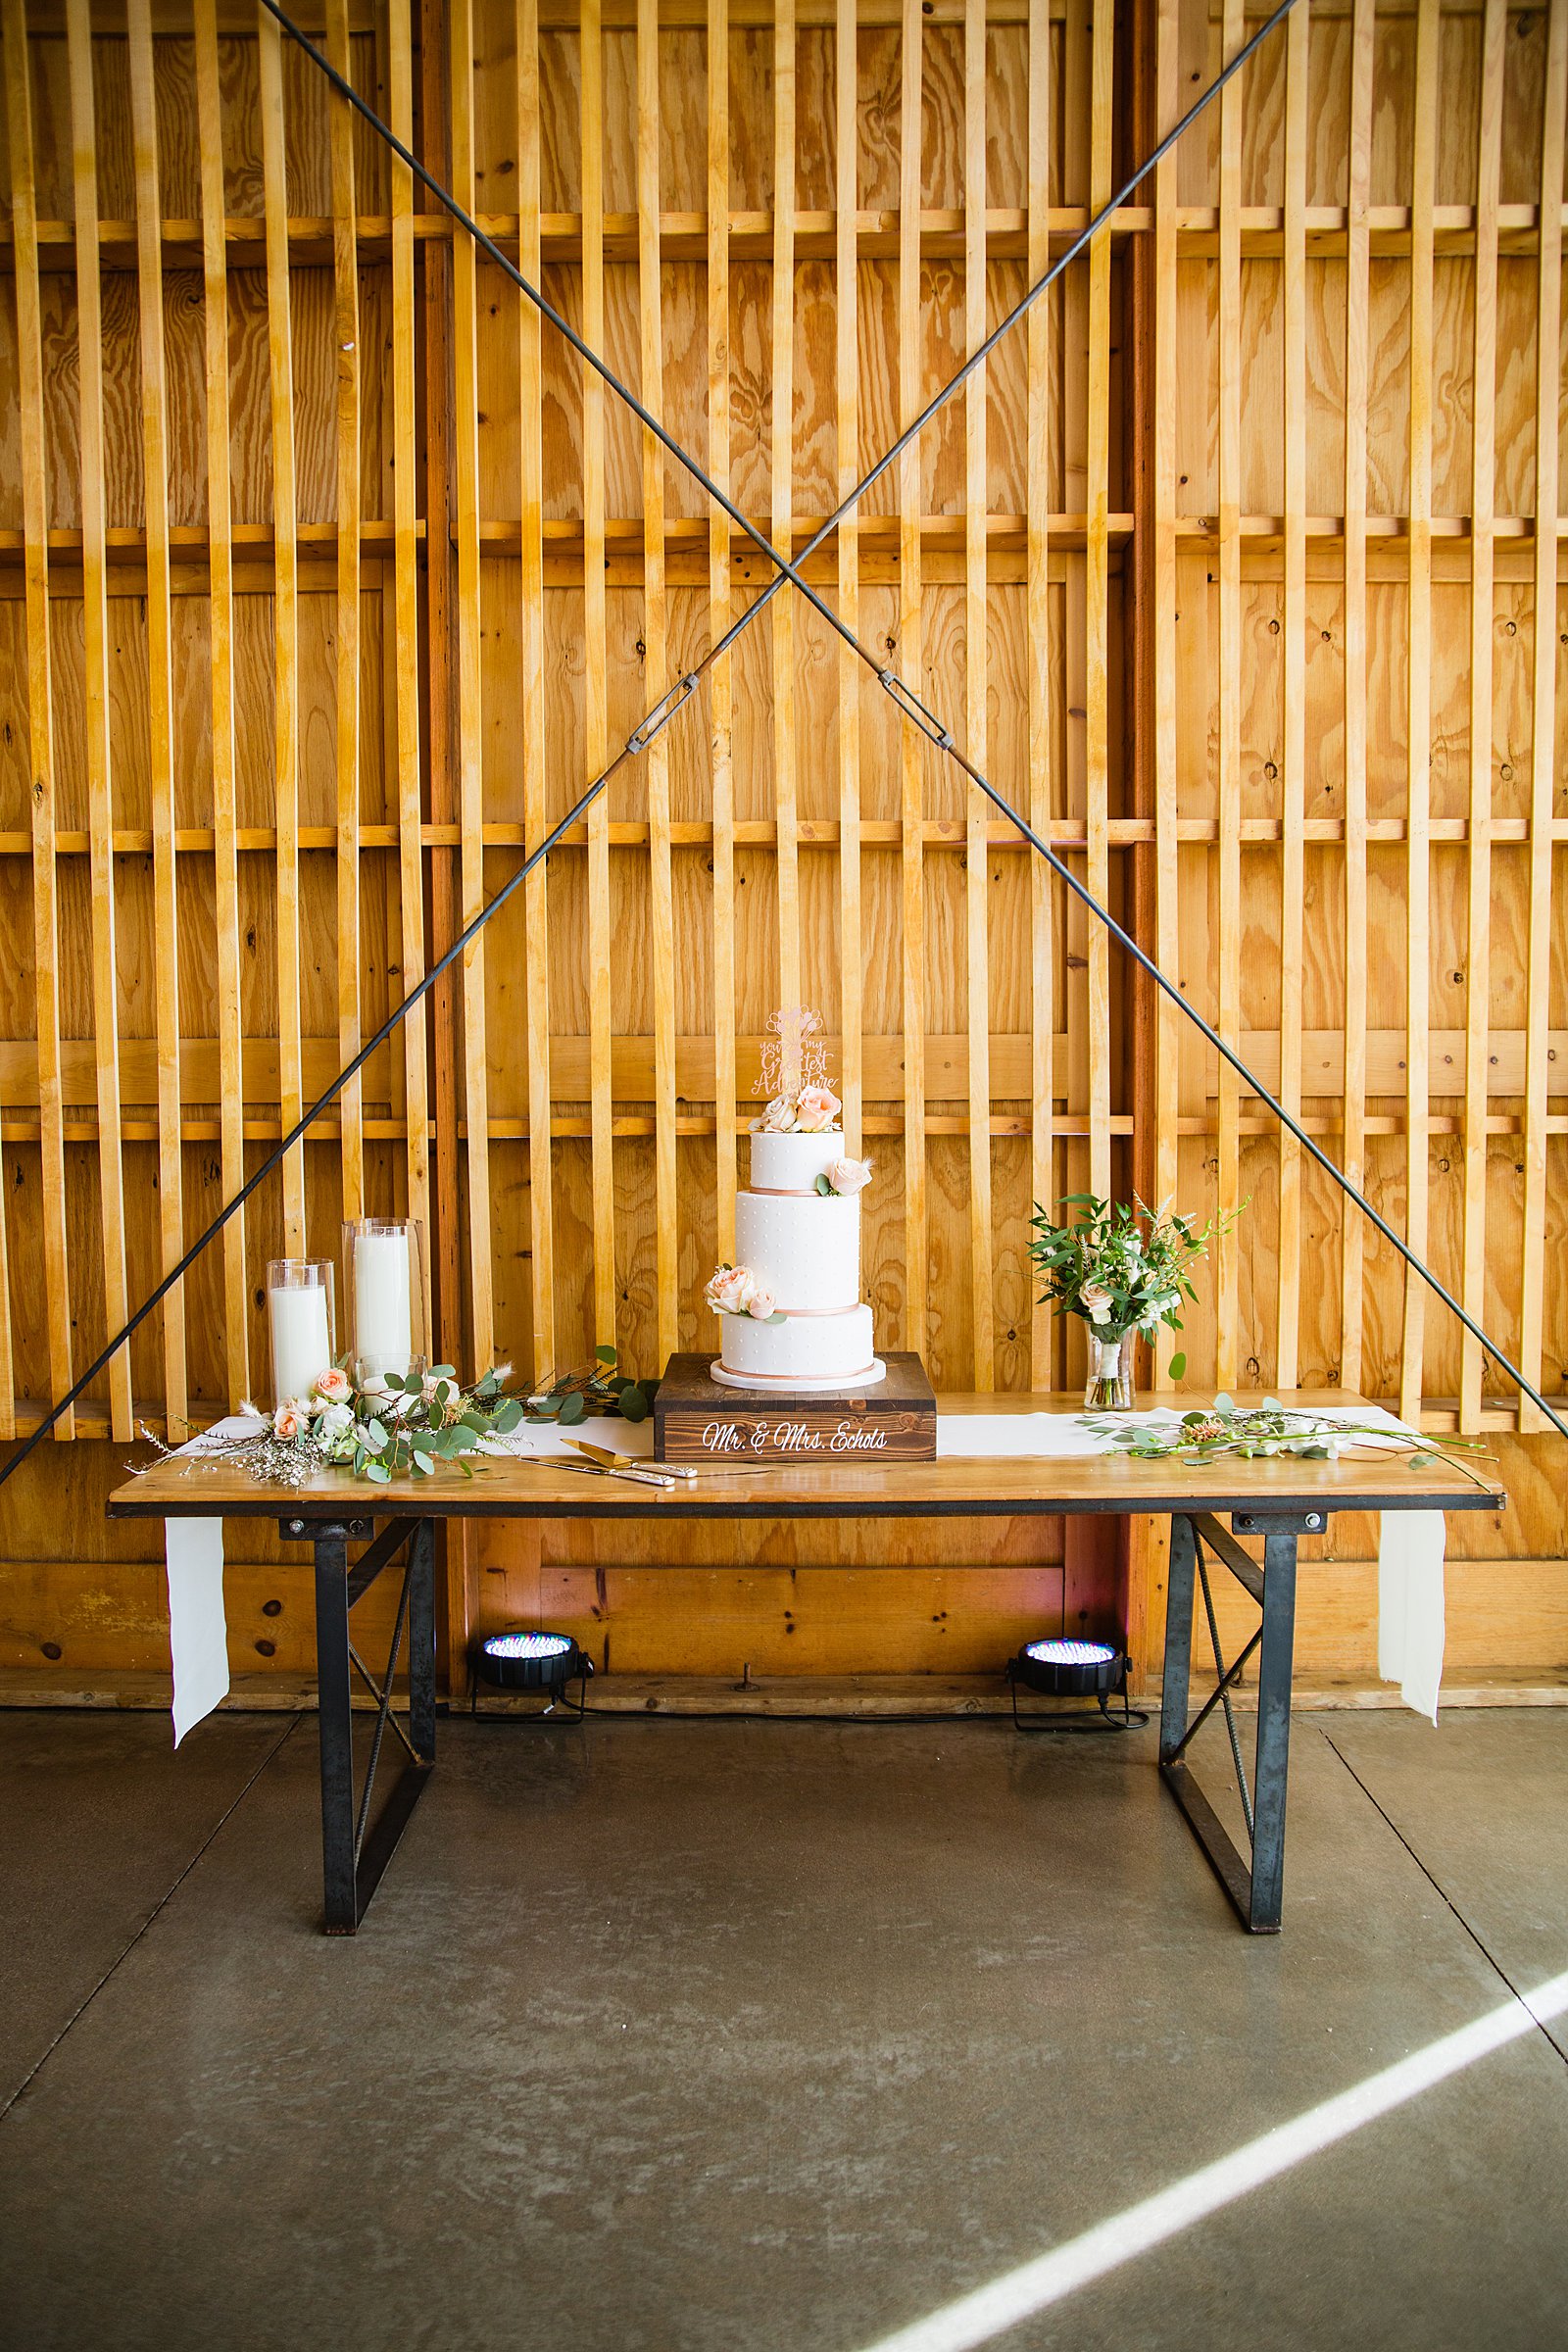 Cake table at The Paseo wedding reception by Phoenix wedding photographer PMA Photography.